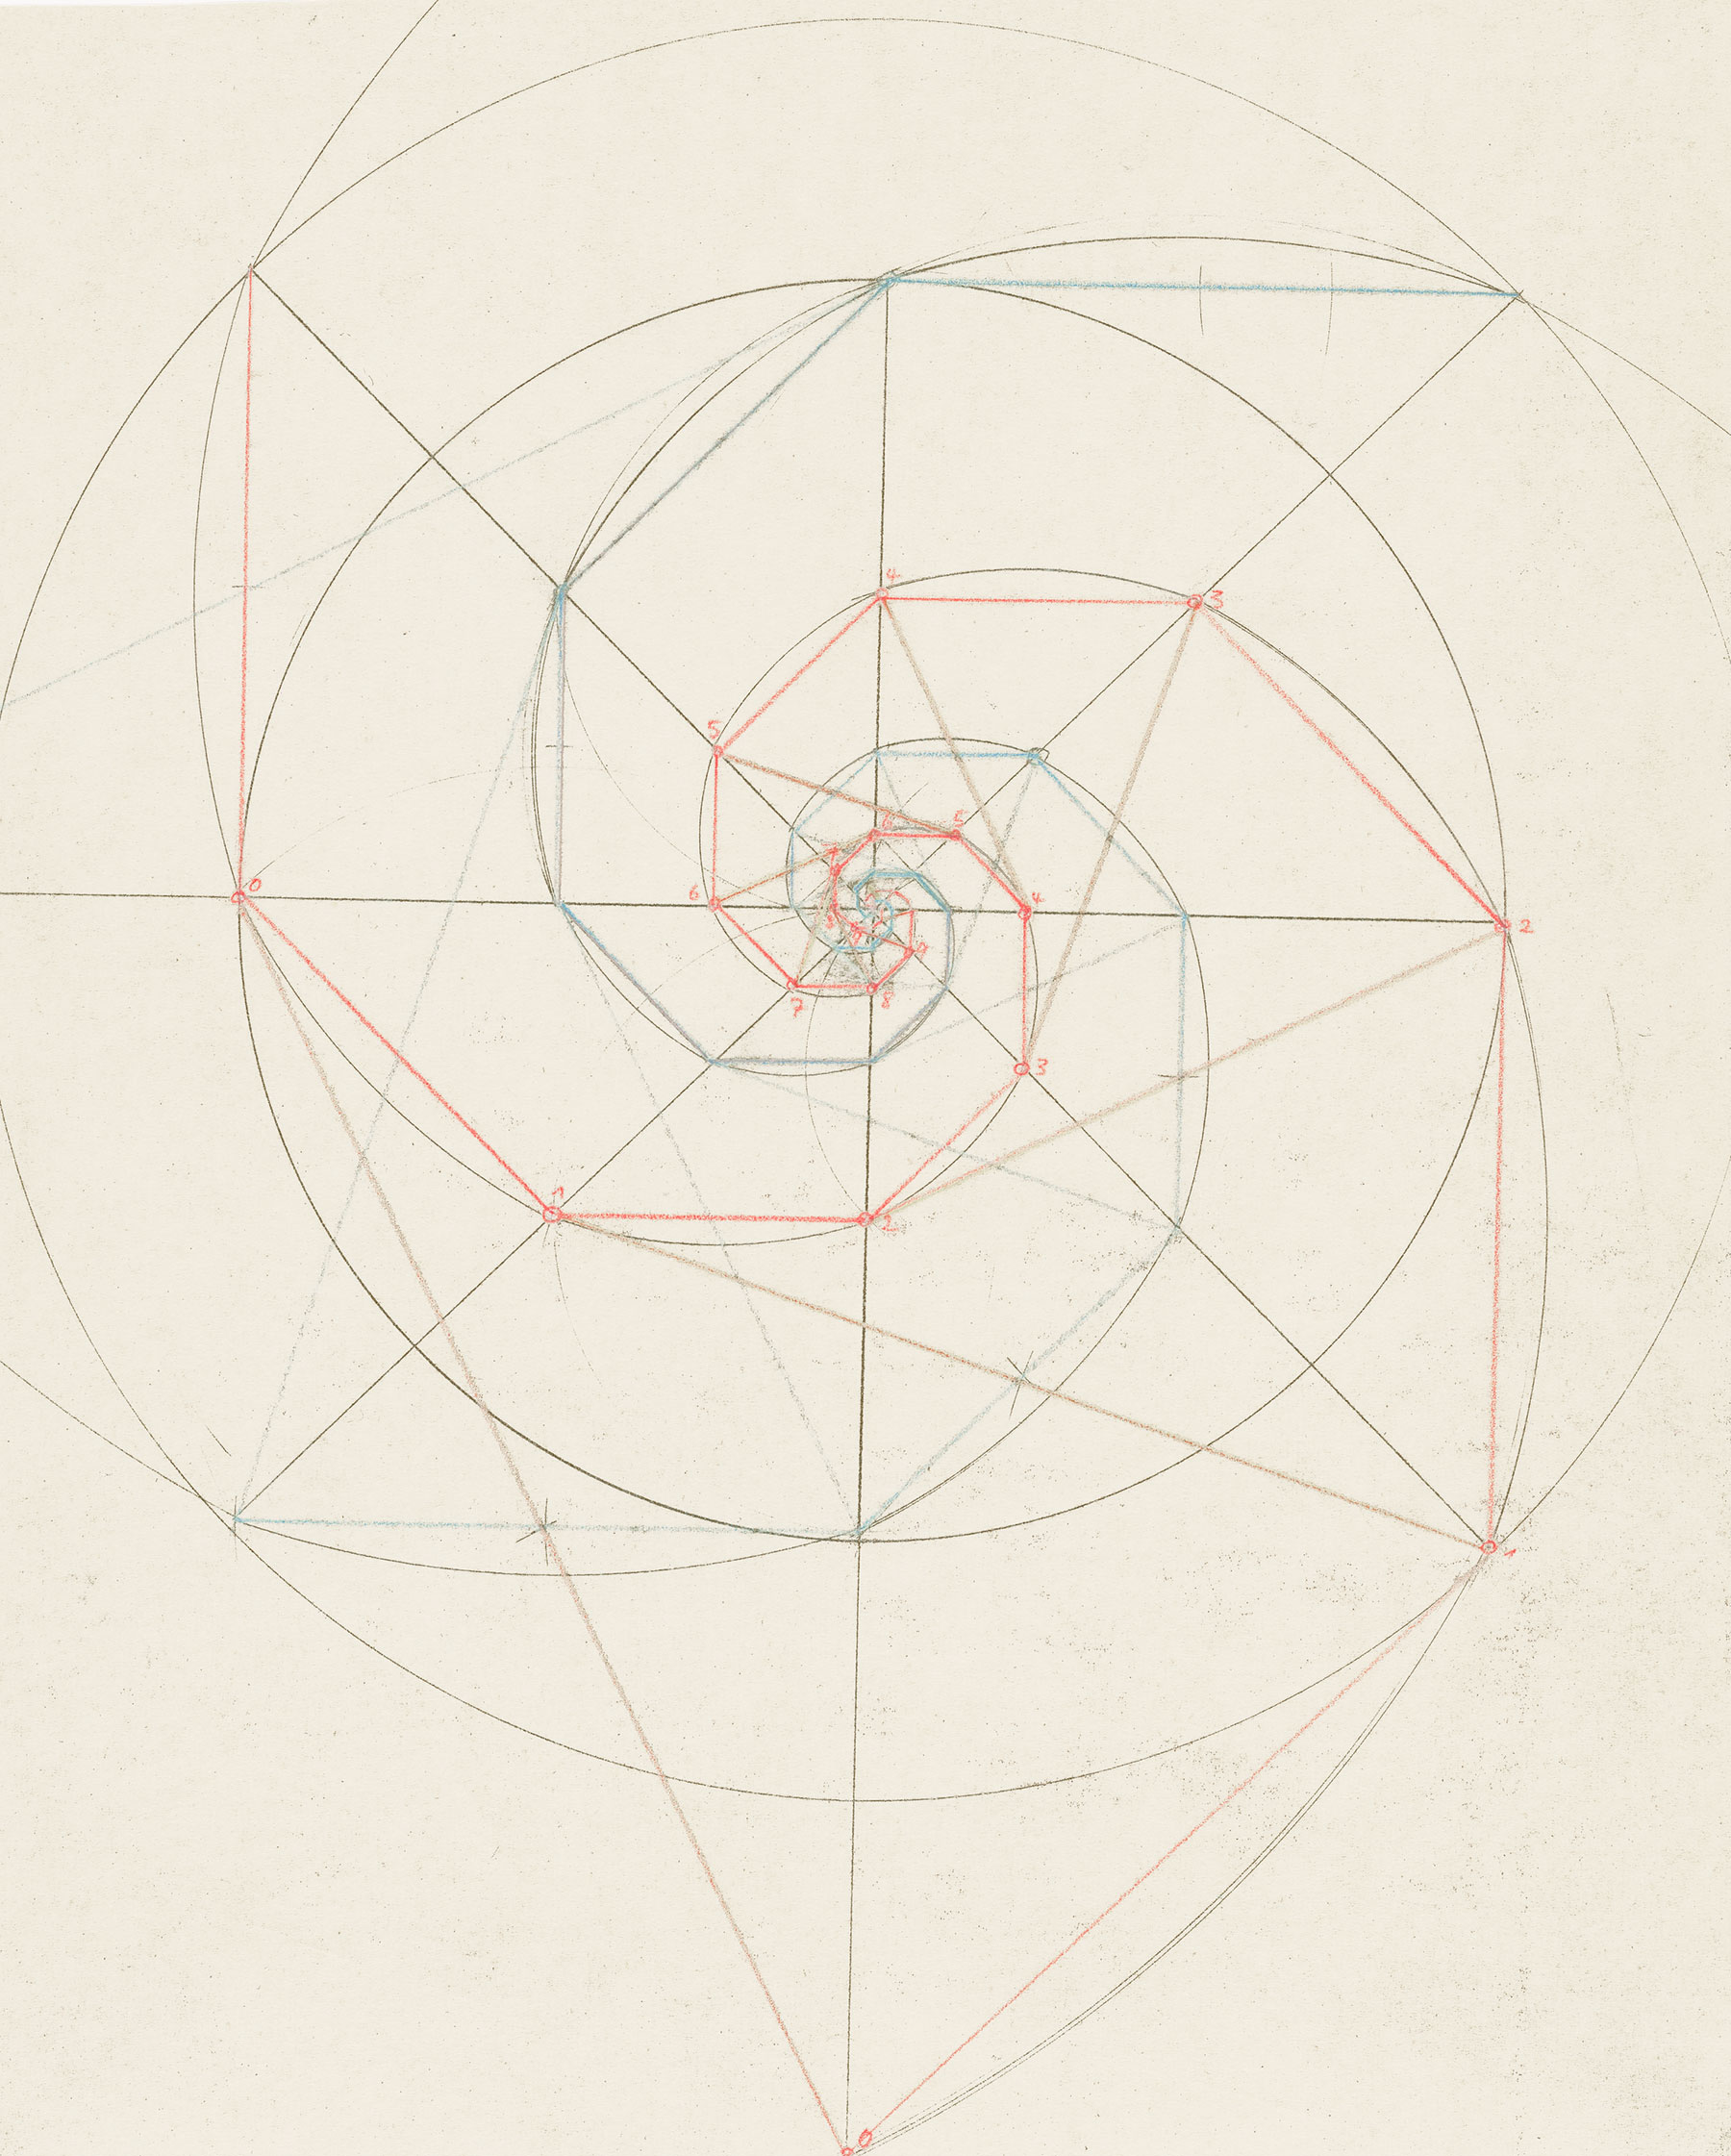 Golden Ratio Grid Paper Sketchbook: Fibonacci Sequence Art